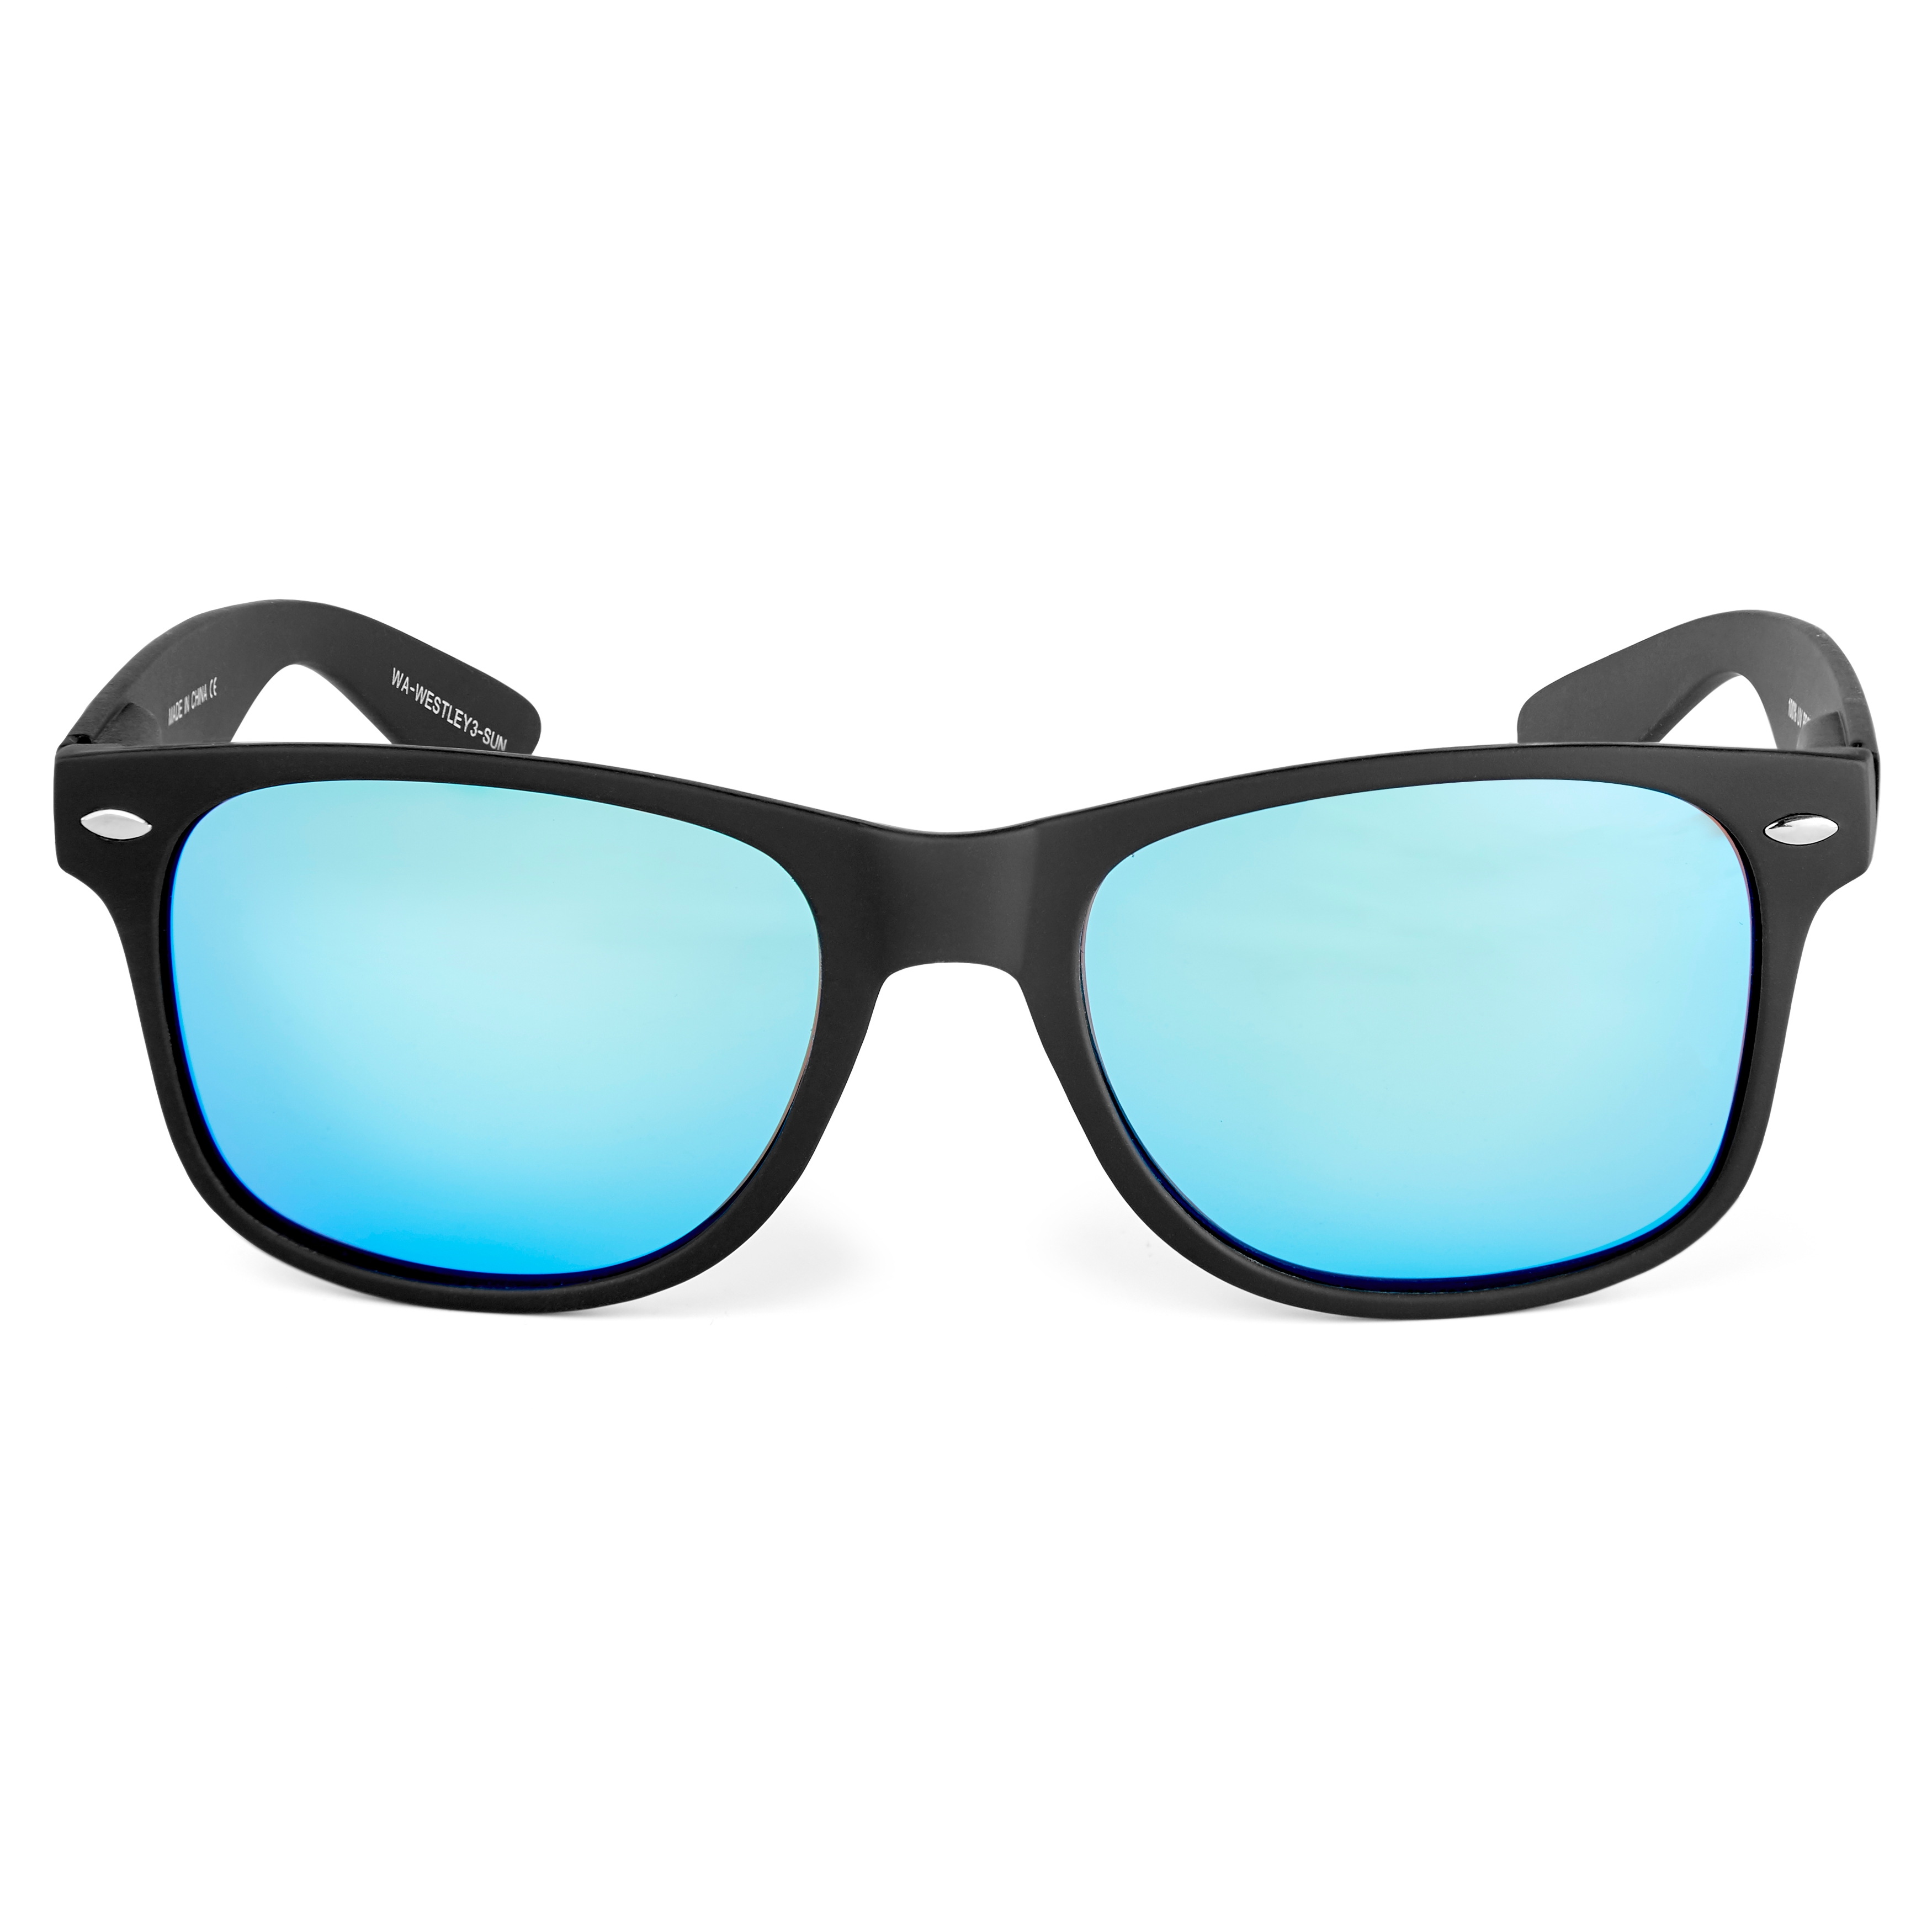 Details 157+ mirror reflective sunglasses latest